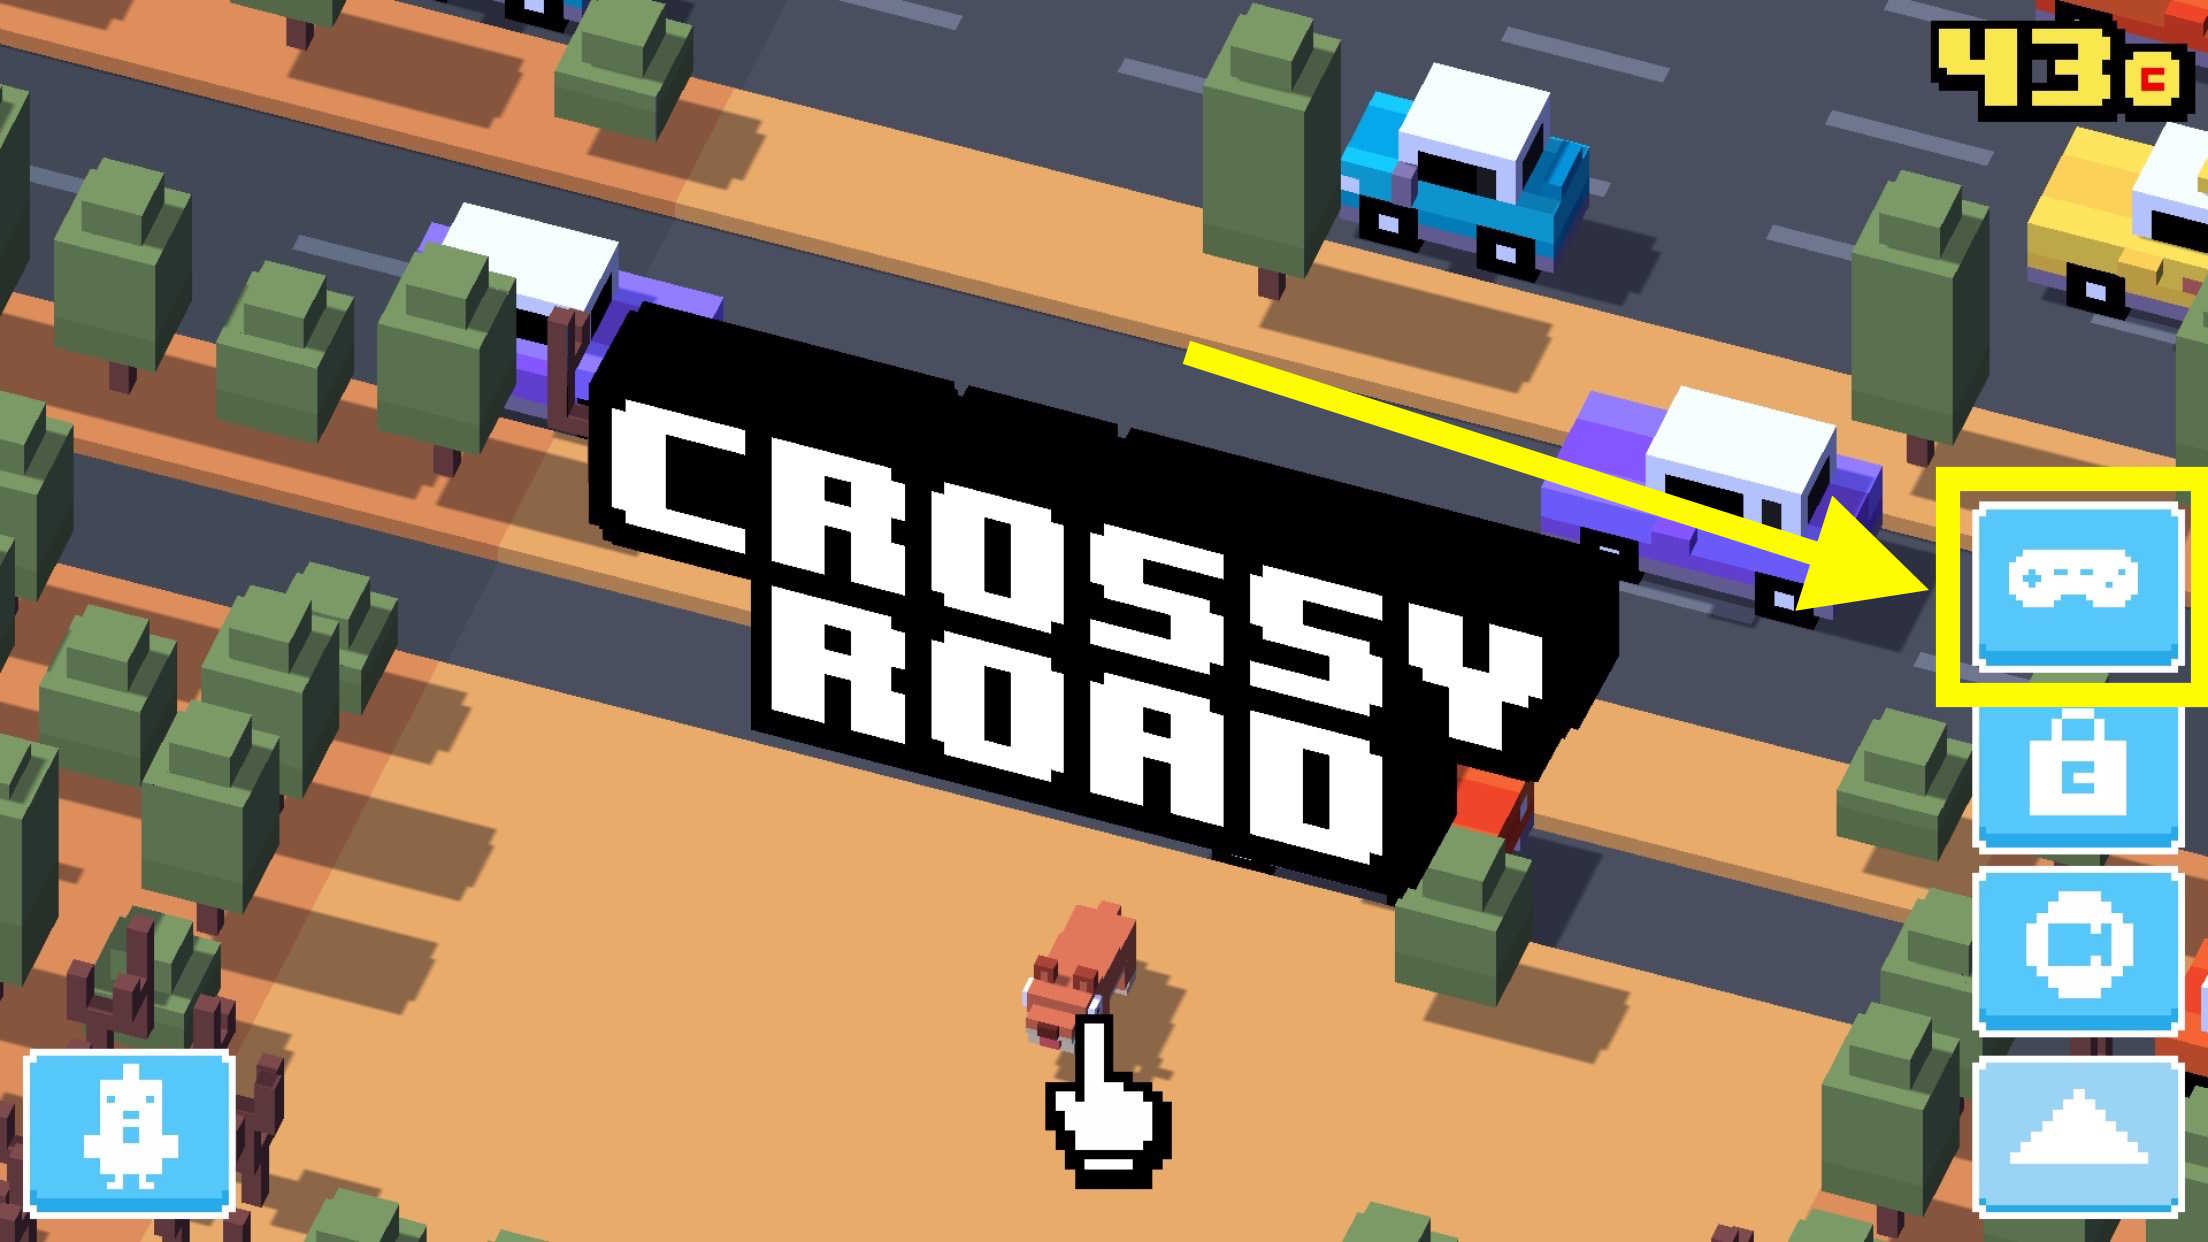 Crossy Road na App Store